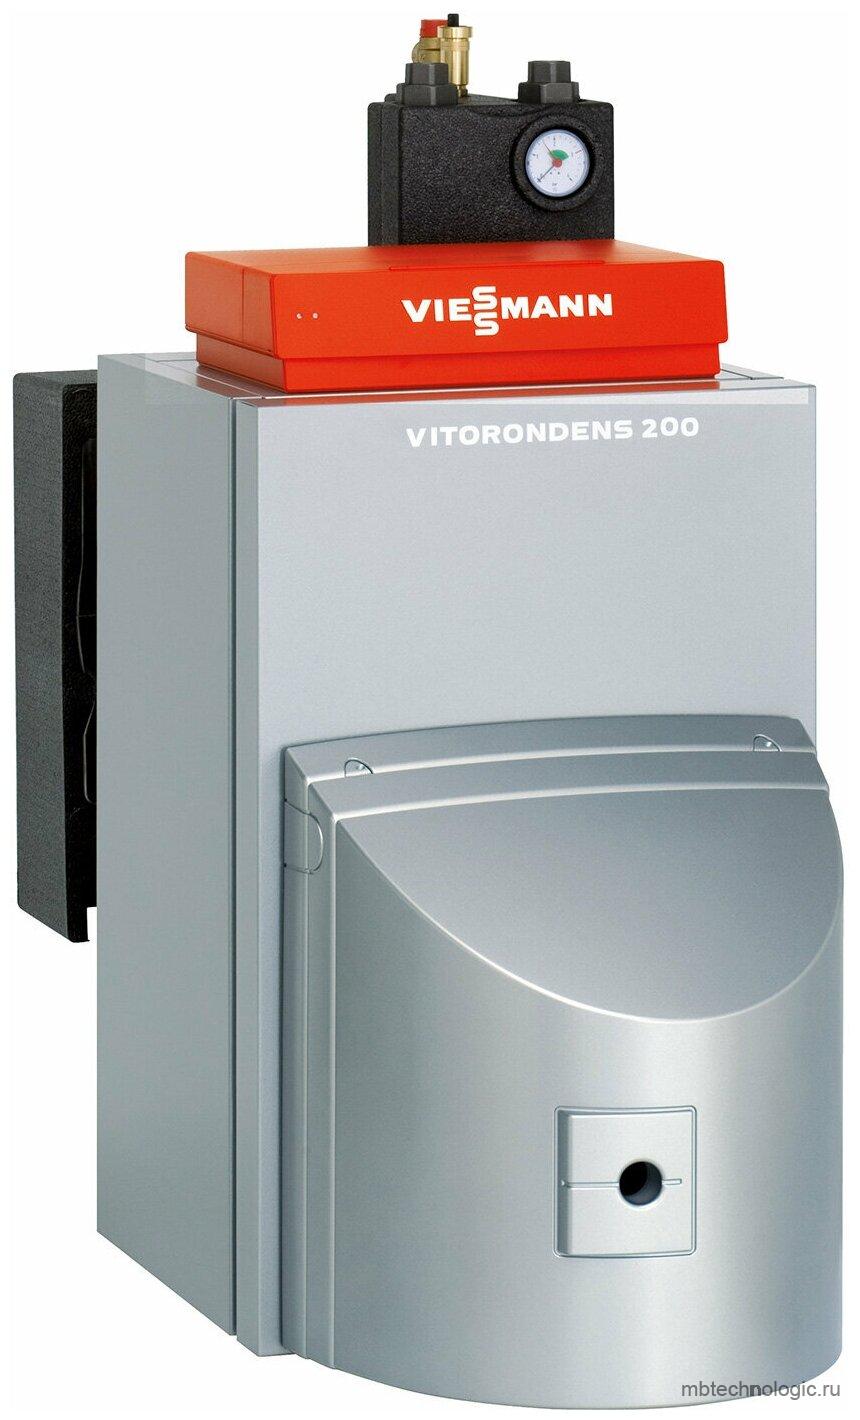 Viessmann Vitorondens 200-T BR2A035